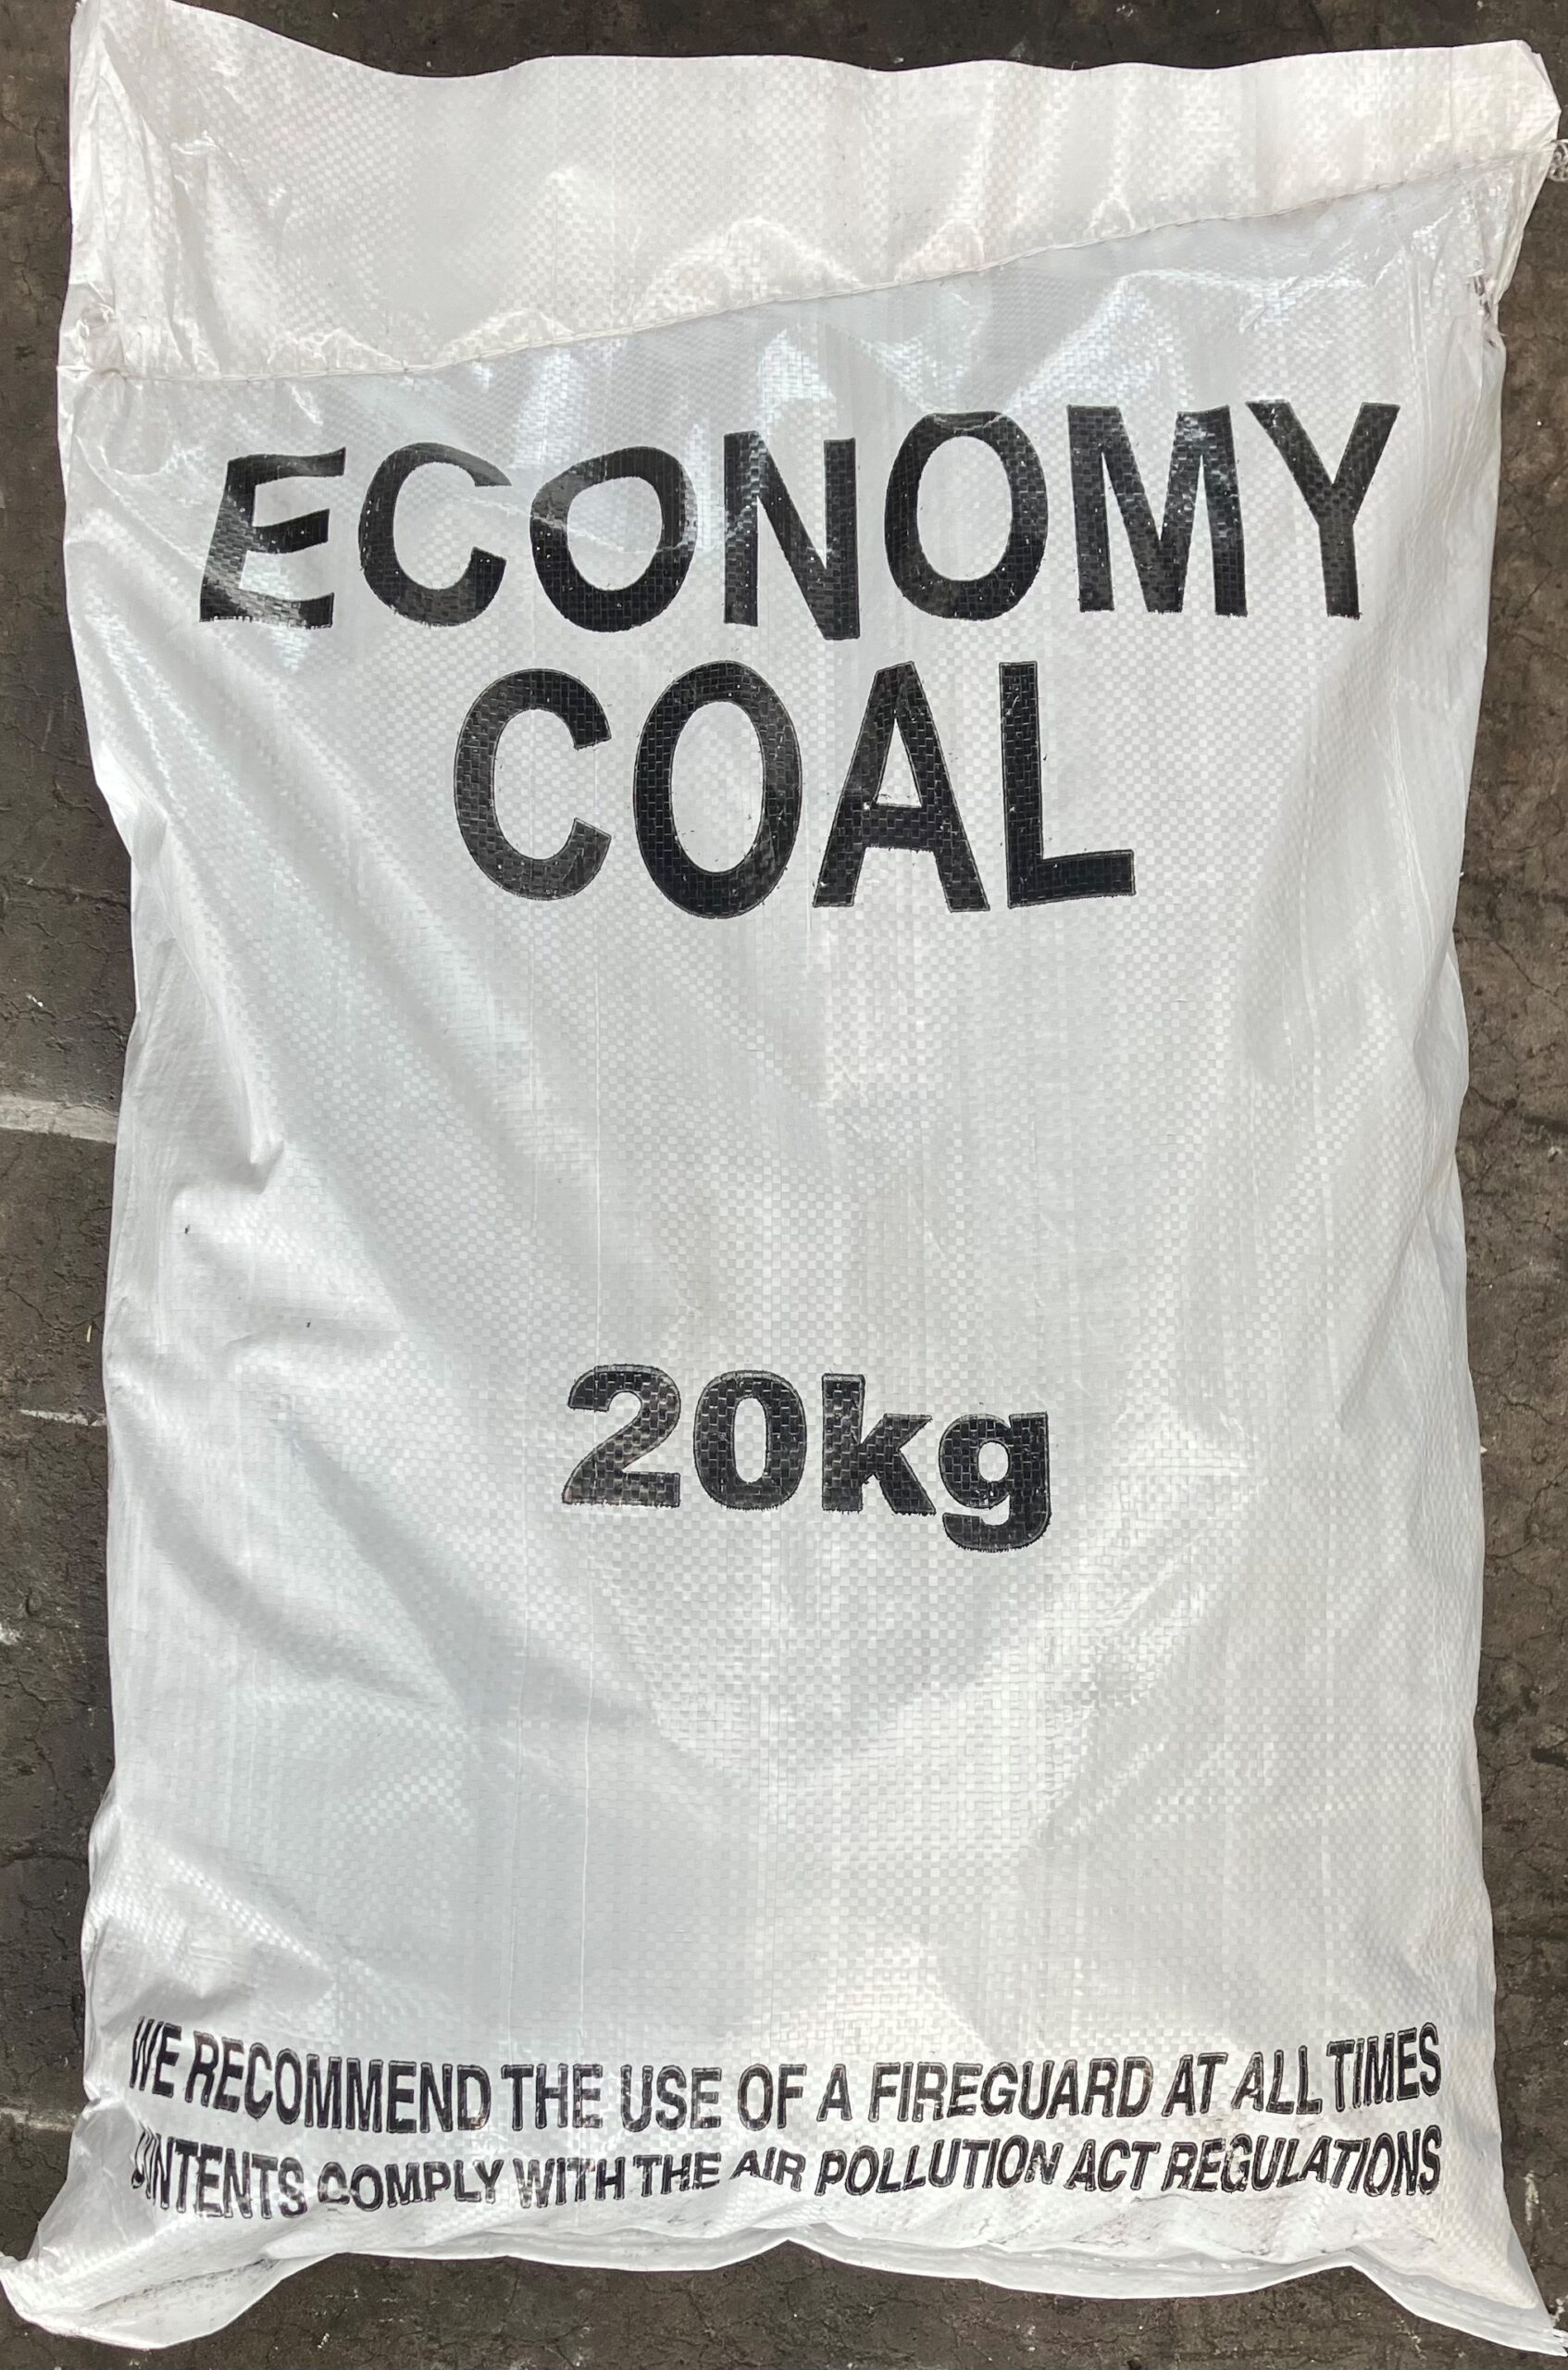 Kane Coal Calco